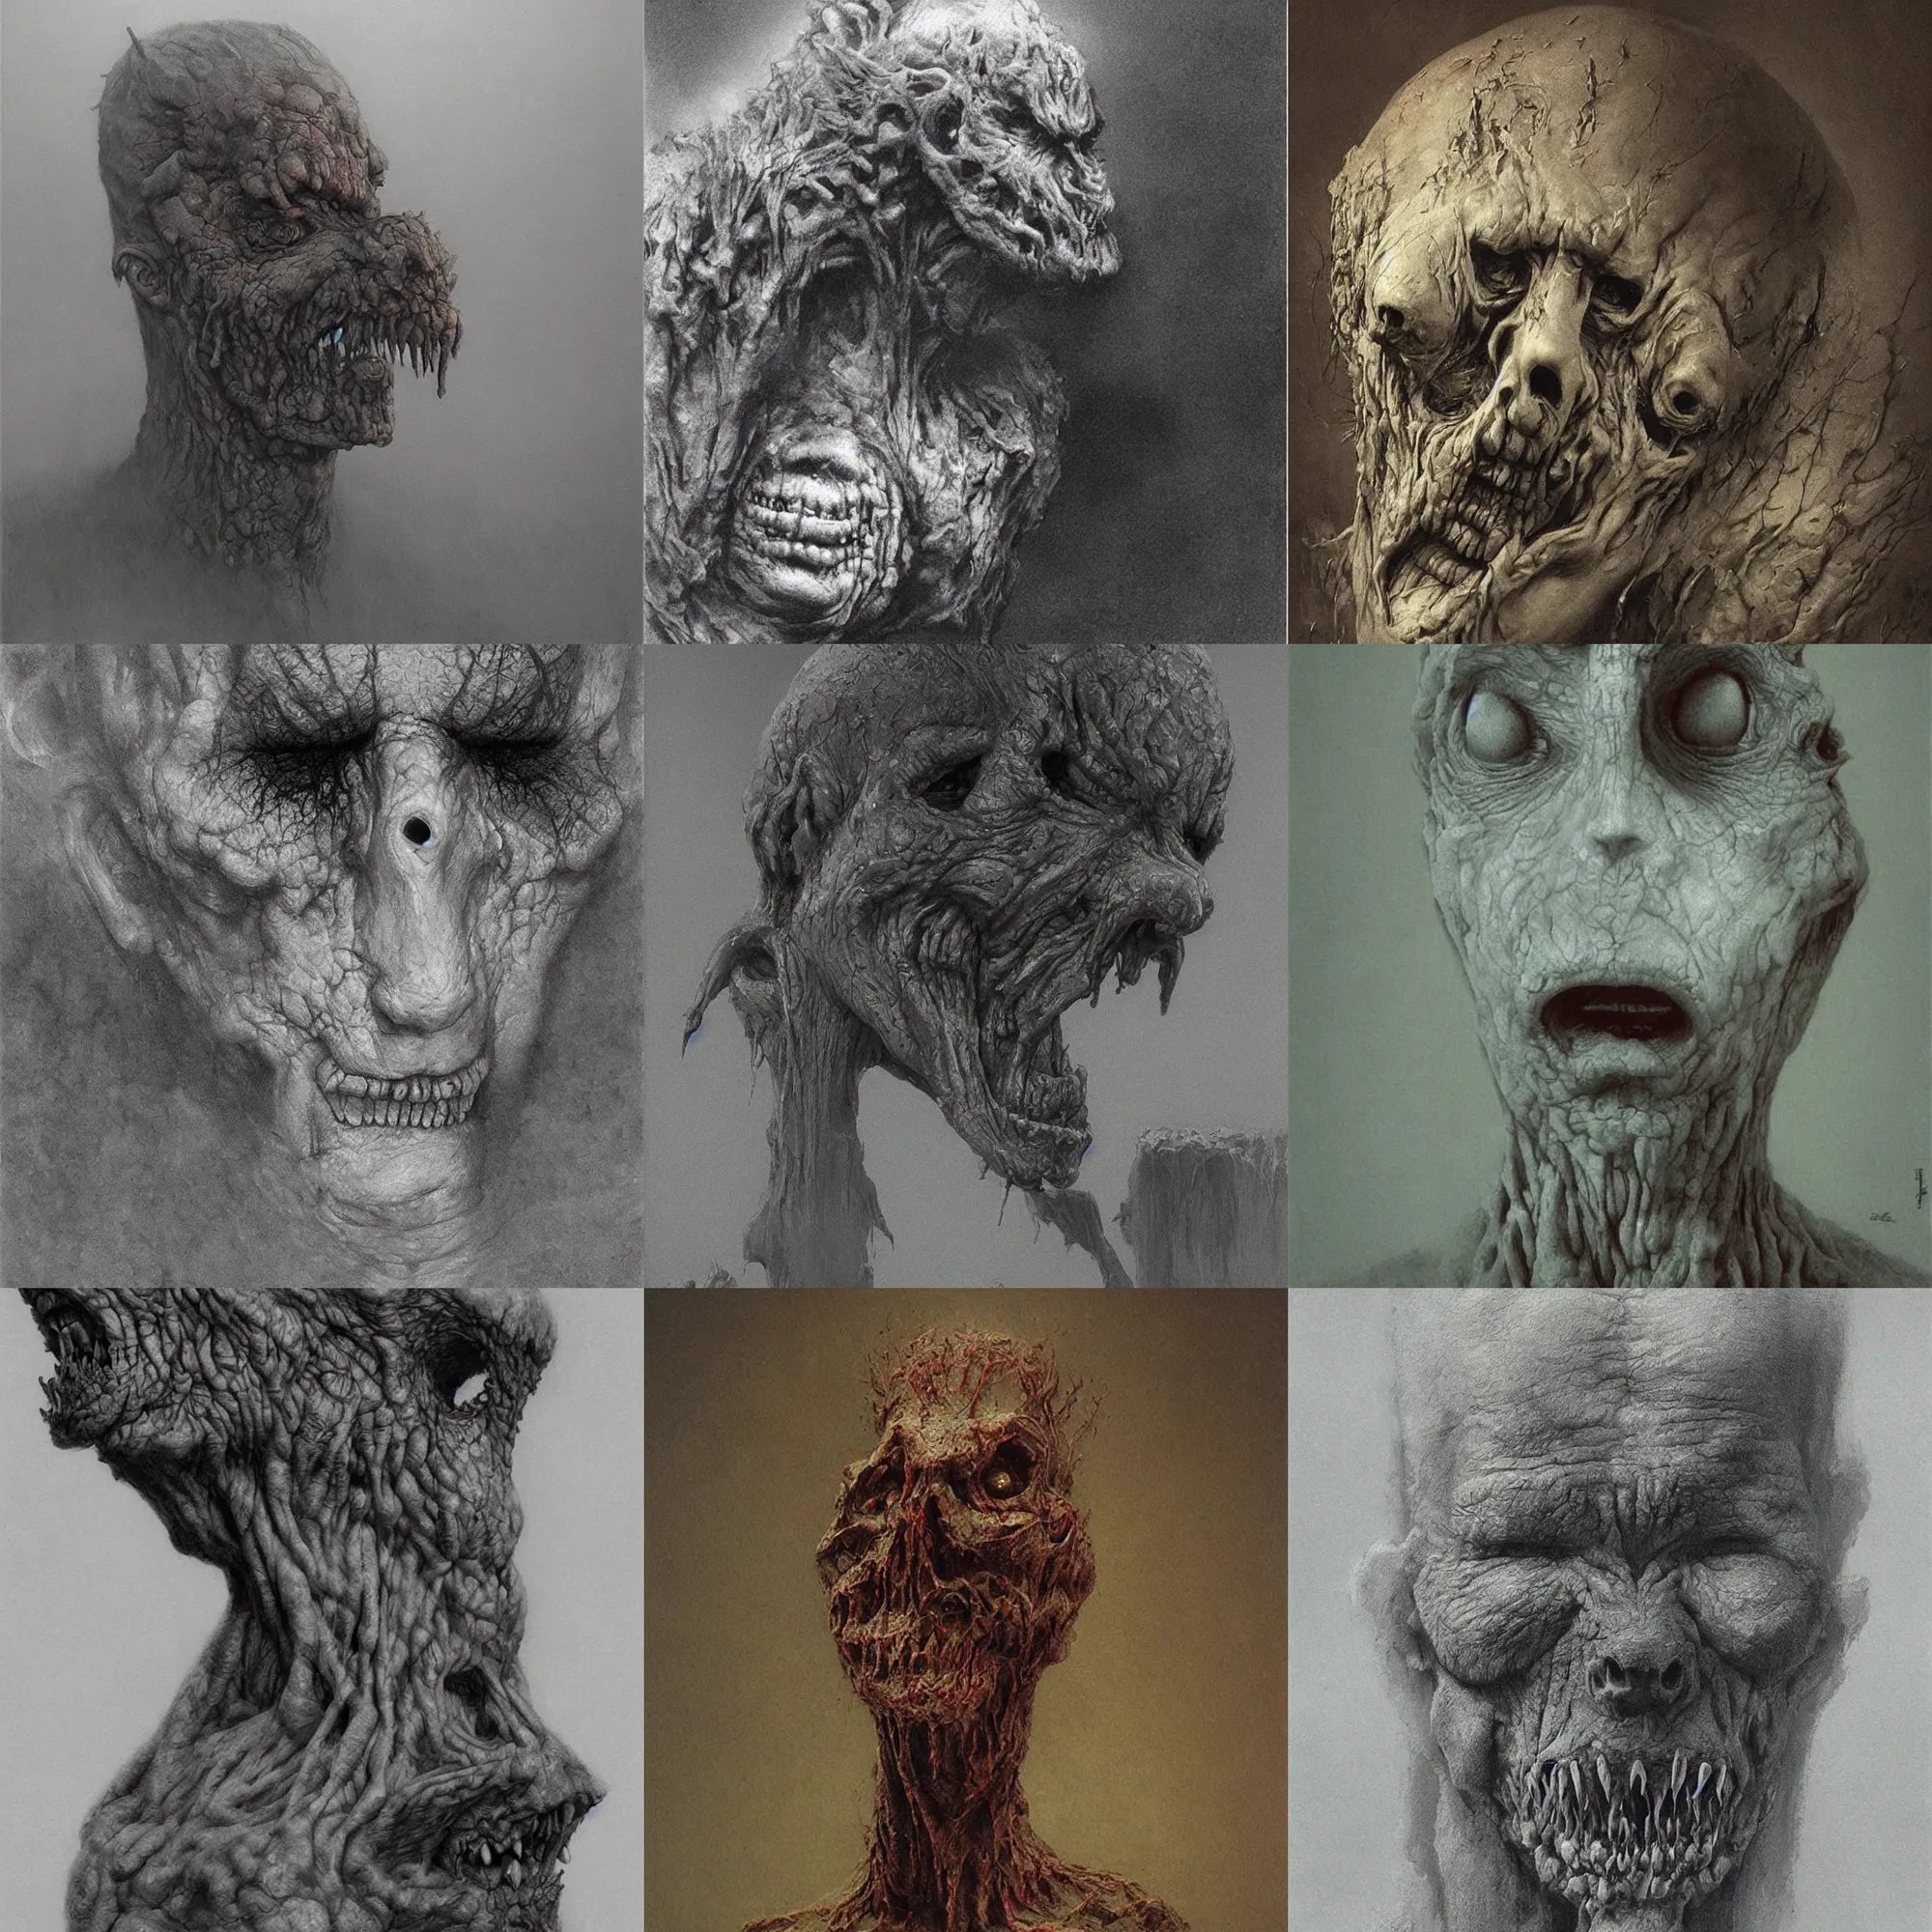 Prompt: creature bust, horror, art by zdzislaw beksinski, concept art, realistic